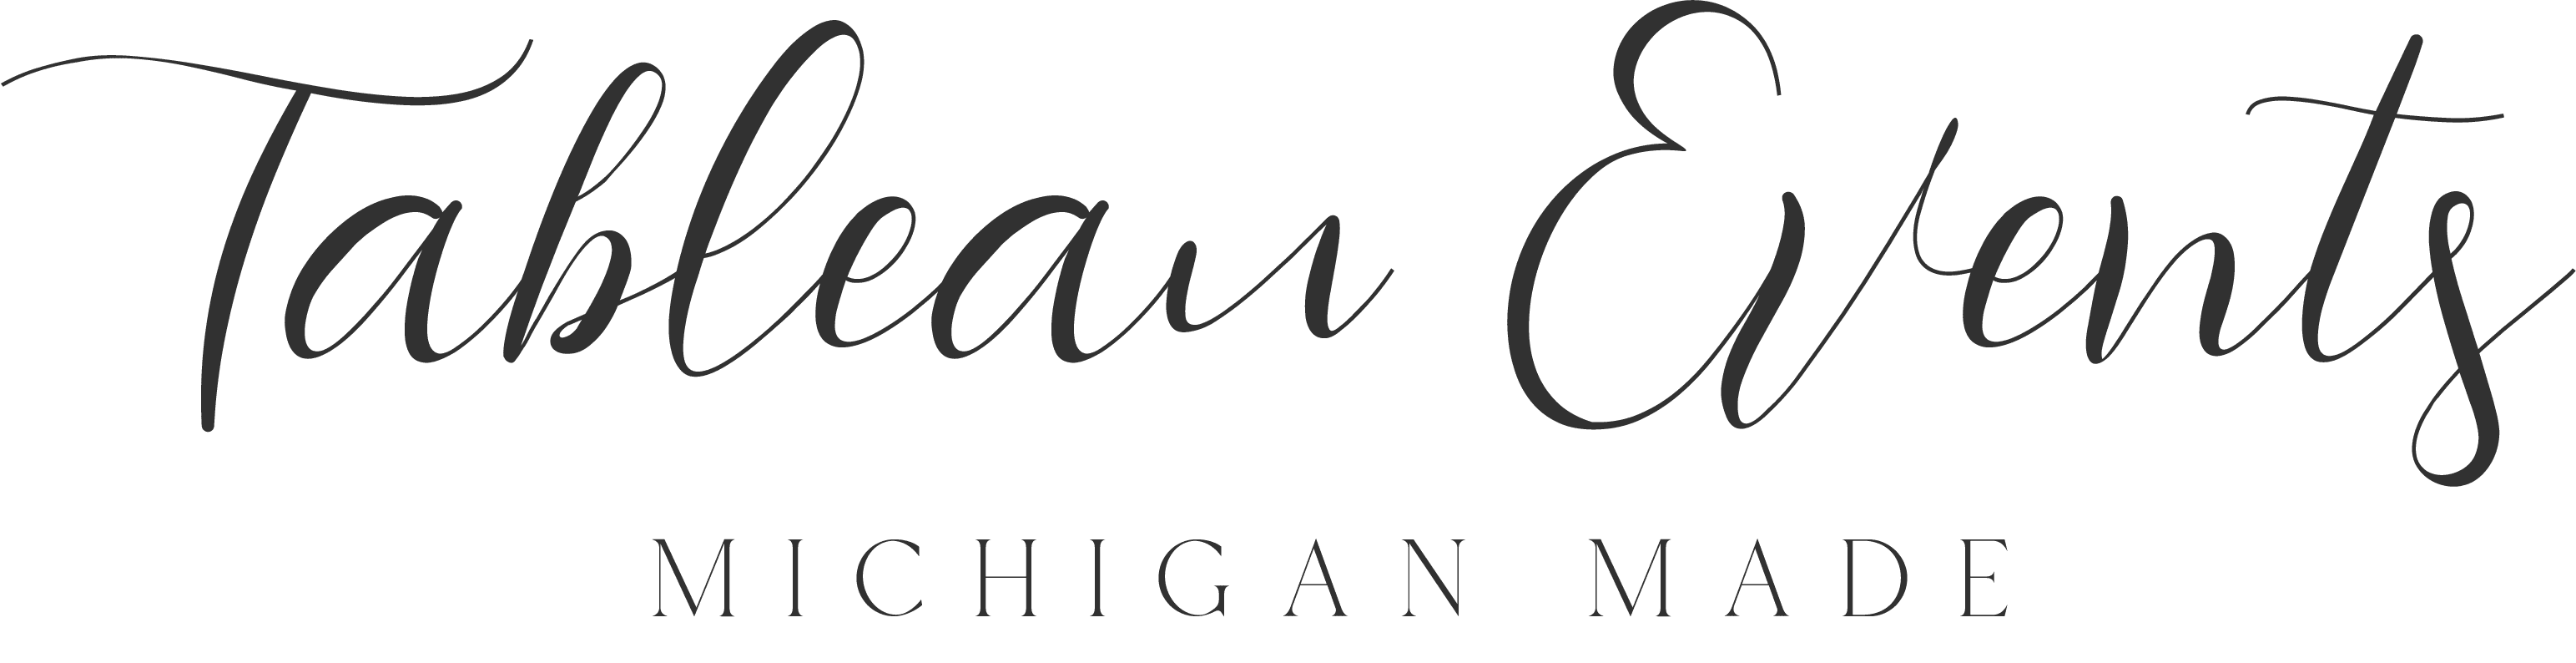 A michigan based business logo